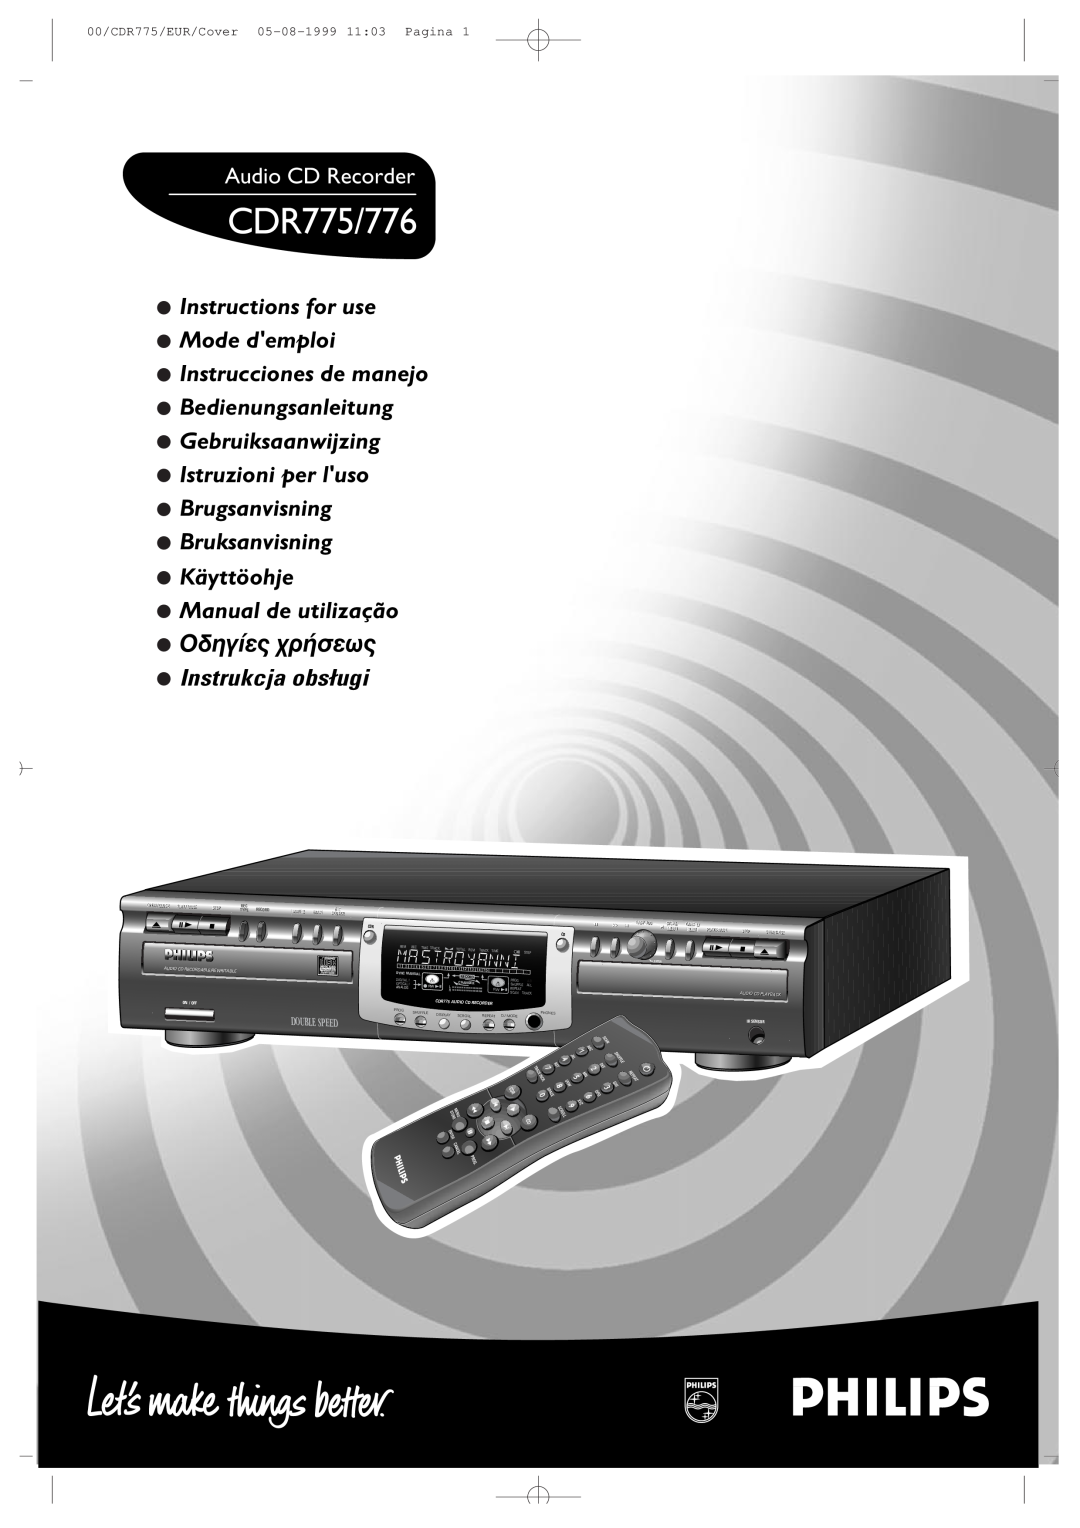 Philips manual CDR775/776, Audio CD Recorder, Manual de utilização, OäèçÝå÷ øòÜóåö÷, Instrukcja obsÂugi, Doublespeed 